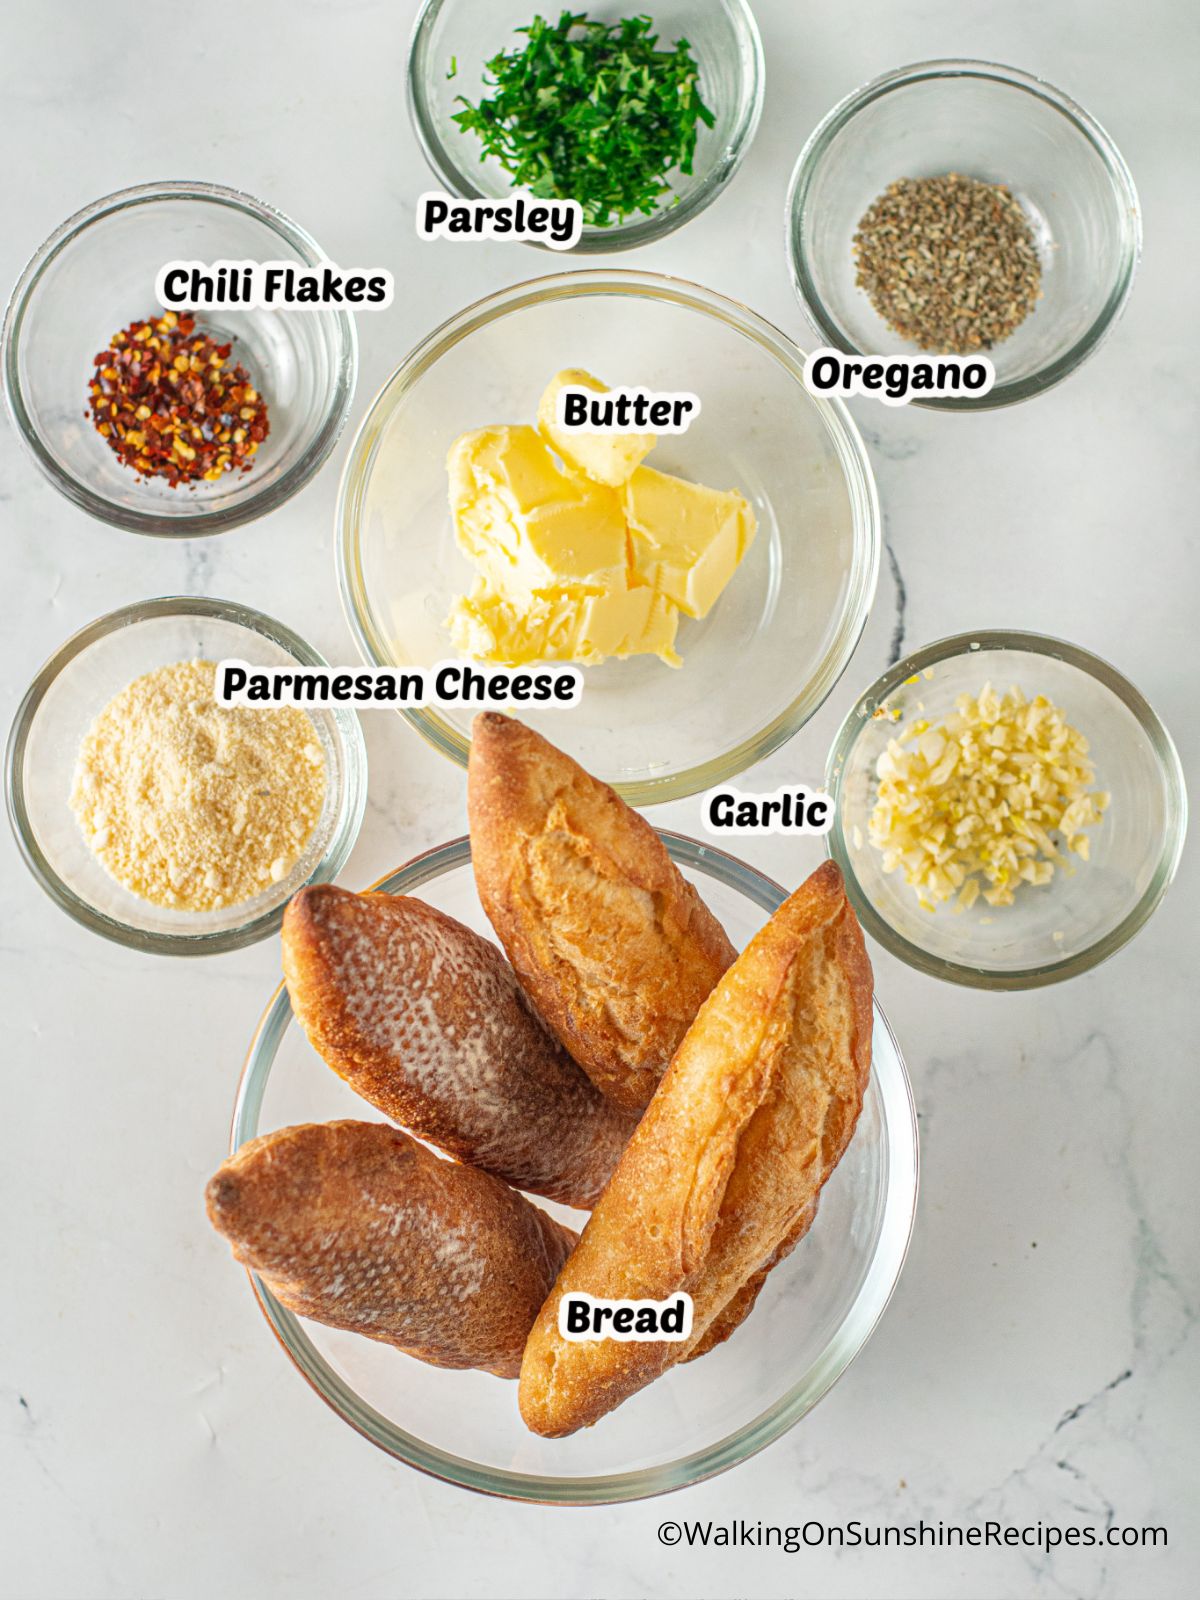 Ingredients for Garlic Butter.